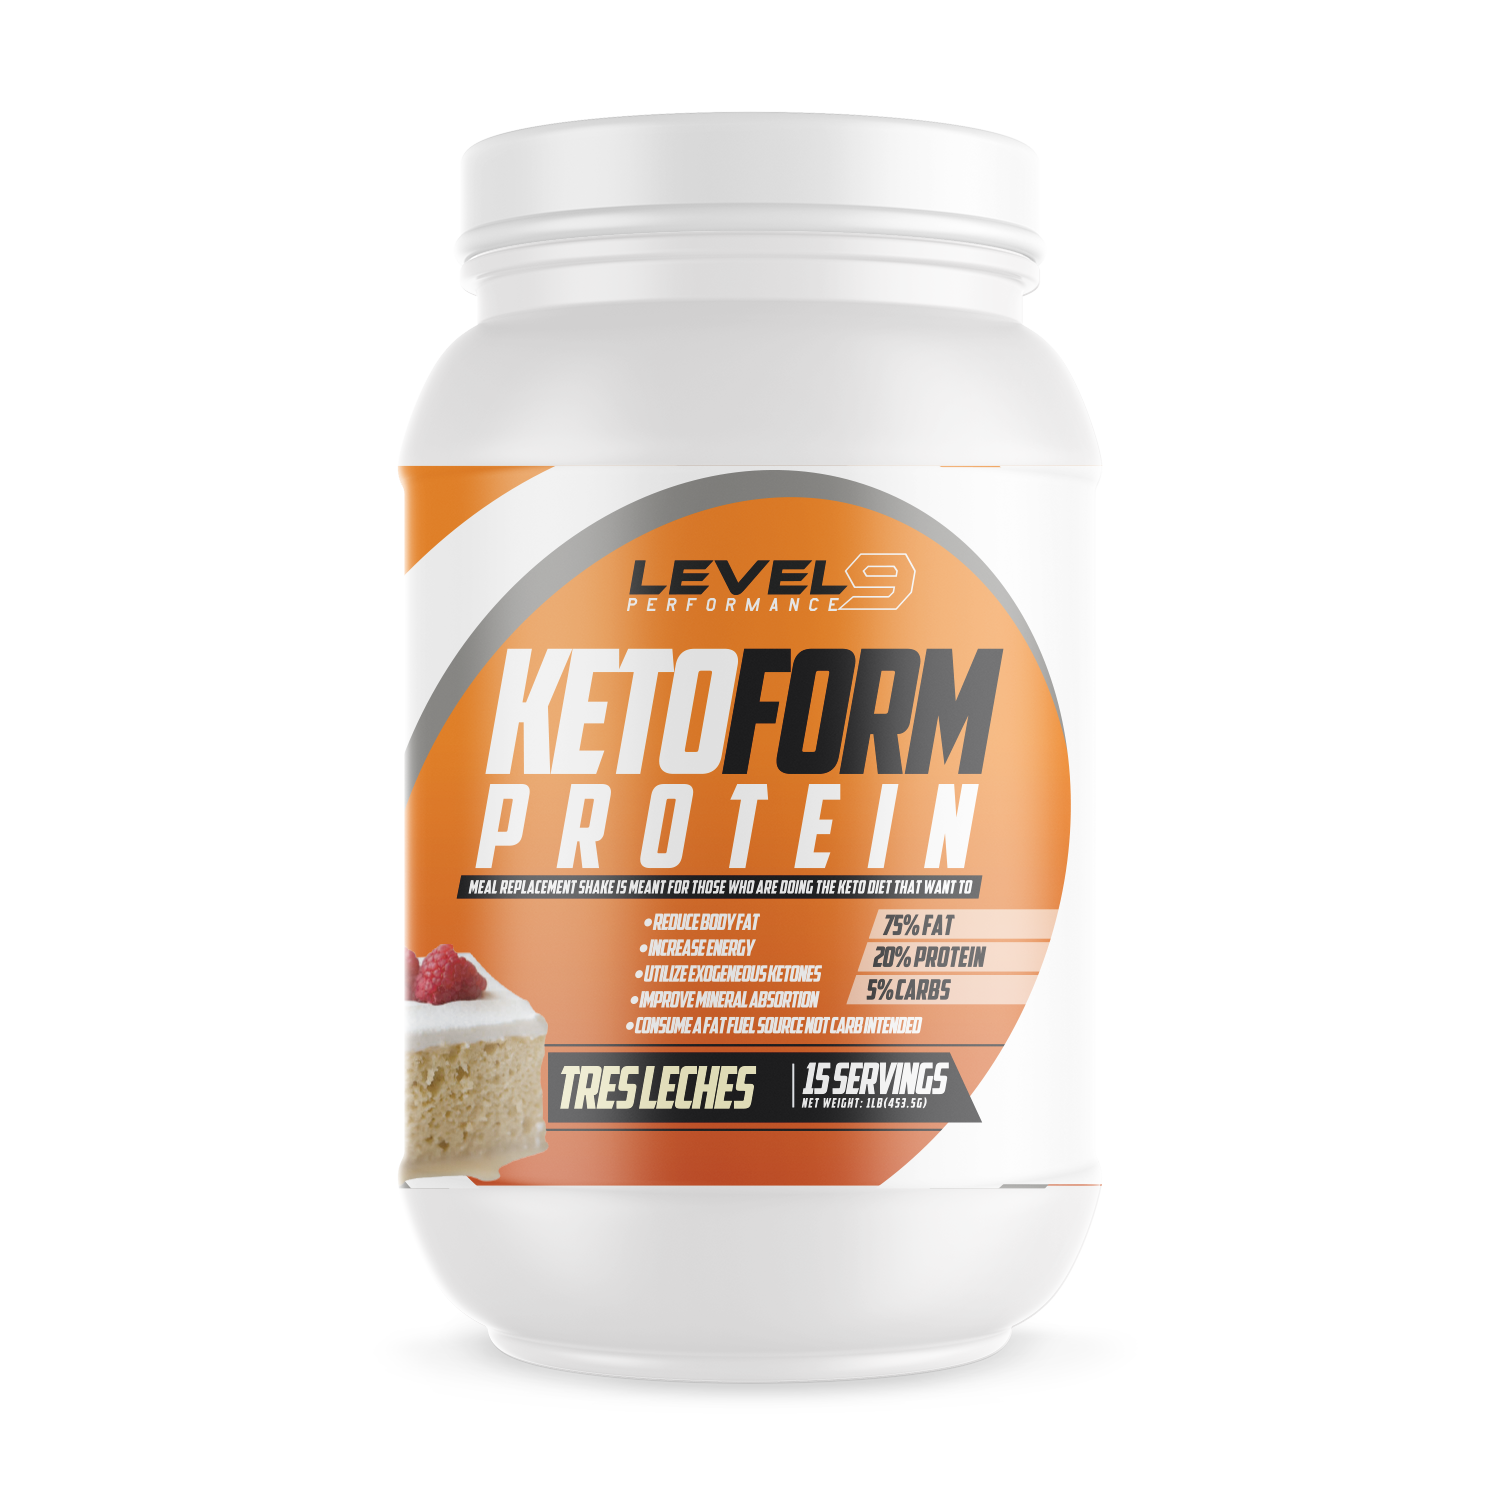 KetoForm Protein